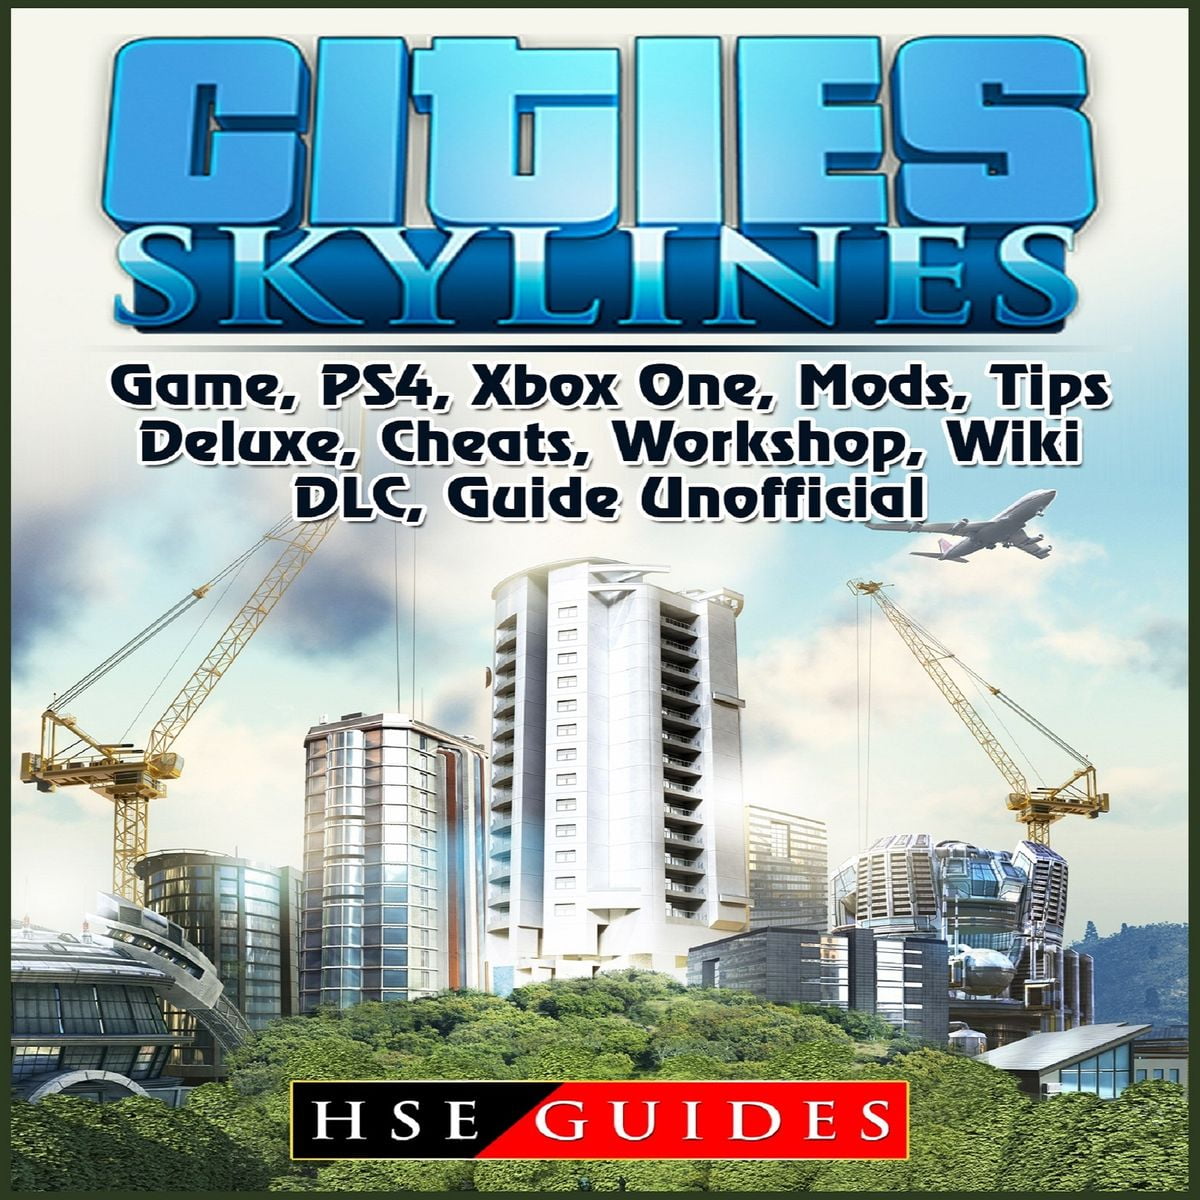 Cities Skylines Game Ps4 Xbox One Mods Tips Deluxe Cheats Workshop Wiki Dlc Guide Unofficial Audiobook Walmart Com Walmart Com